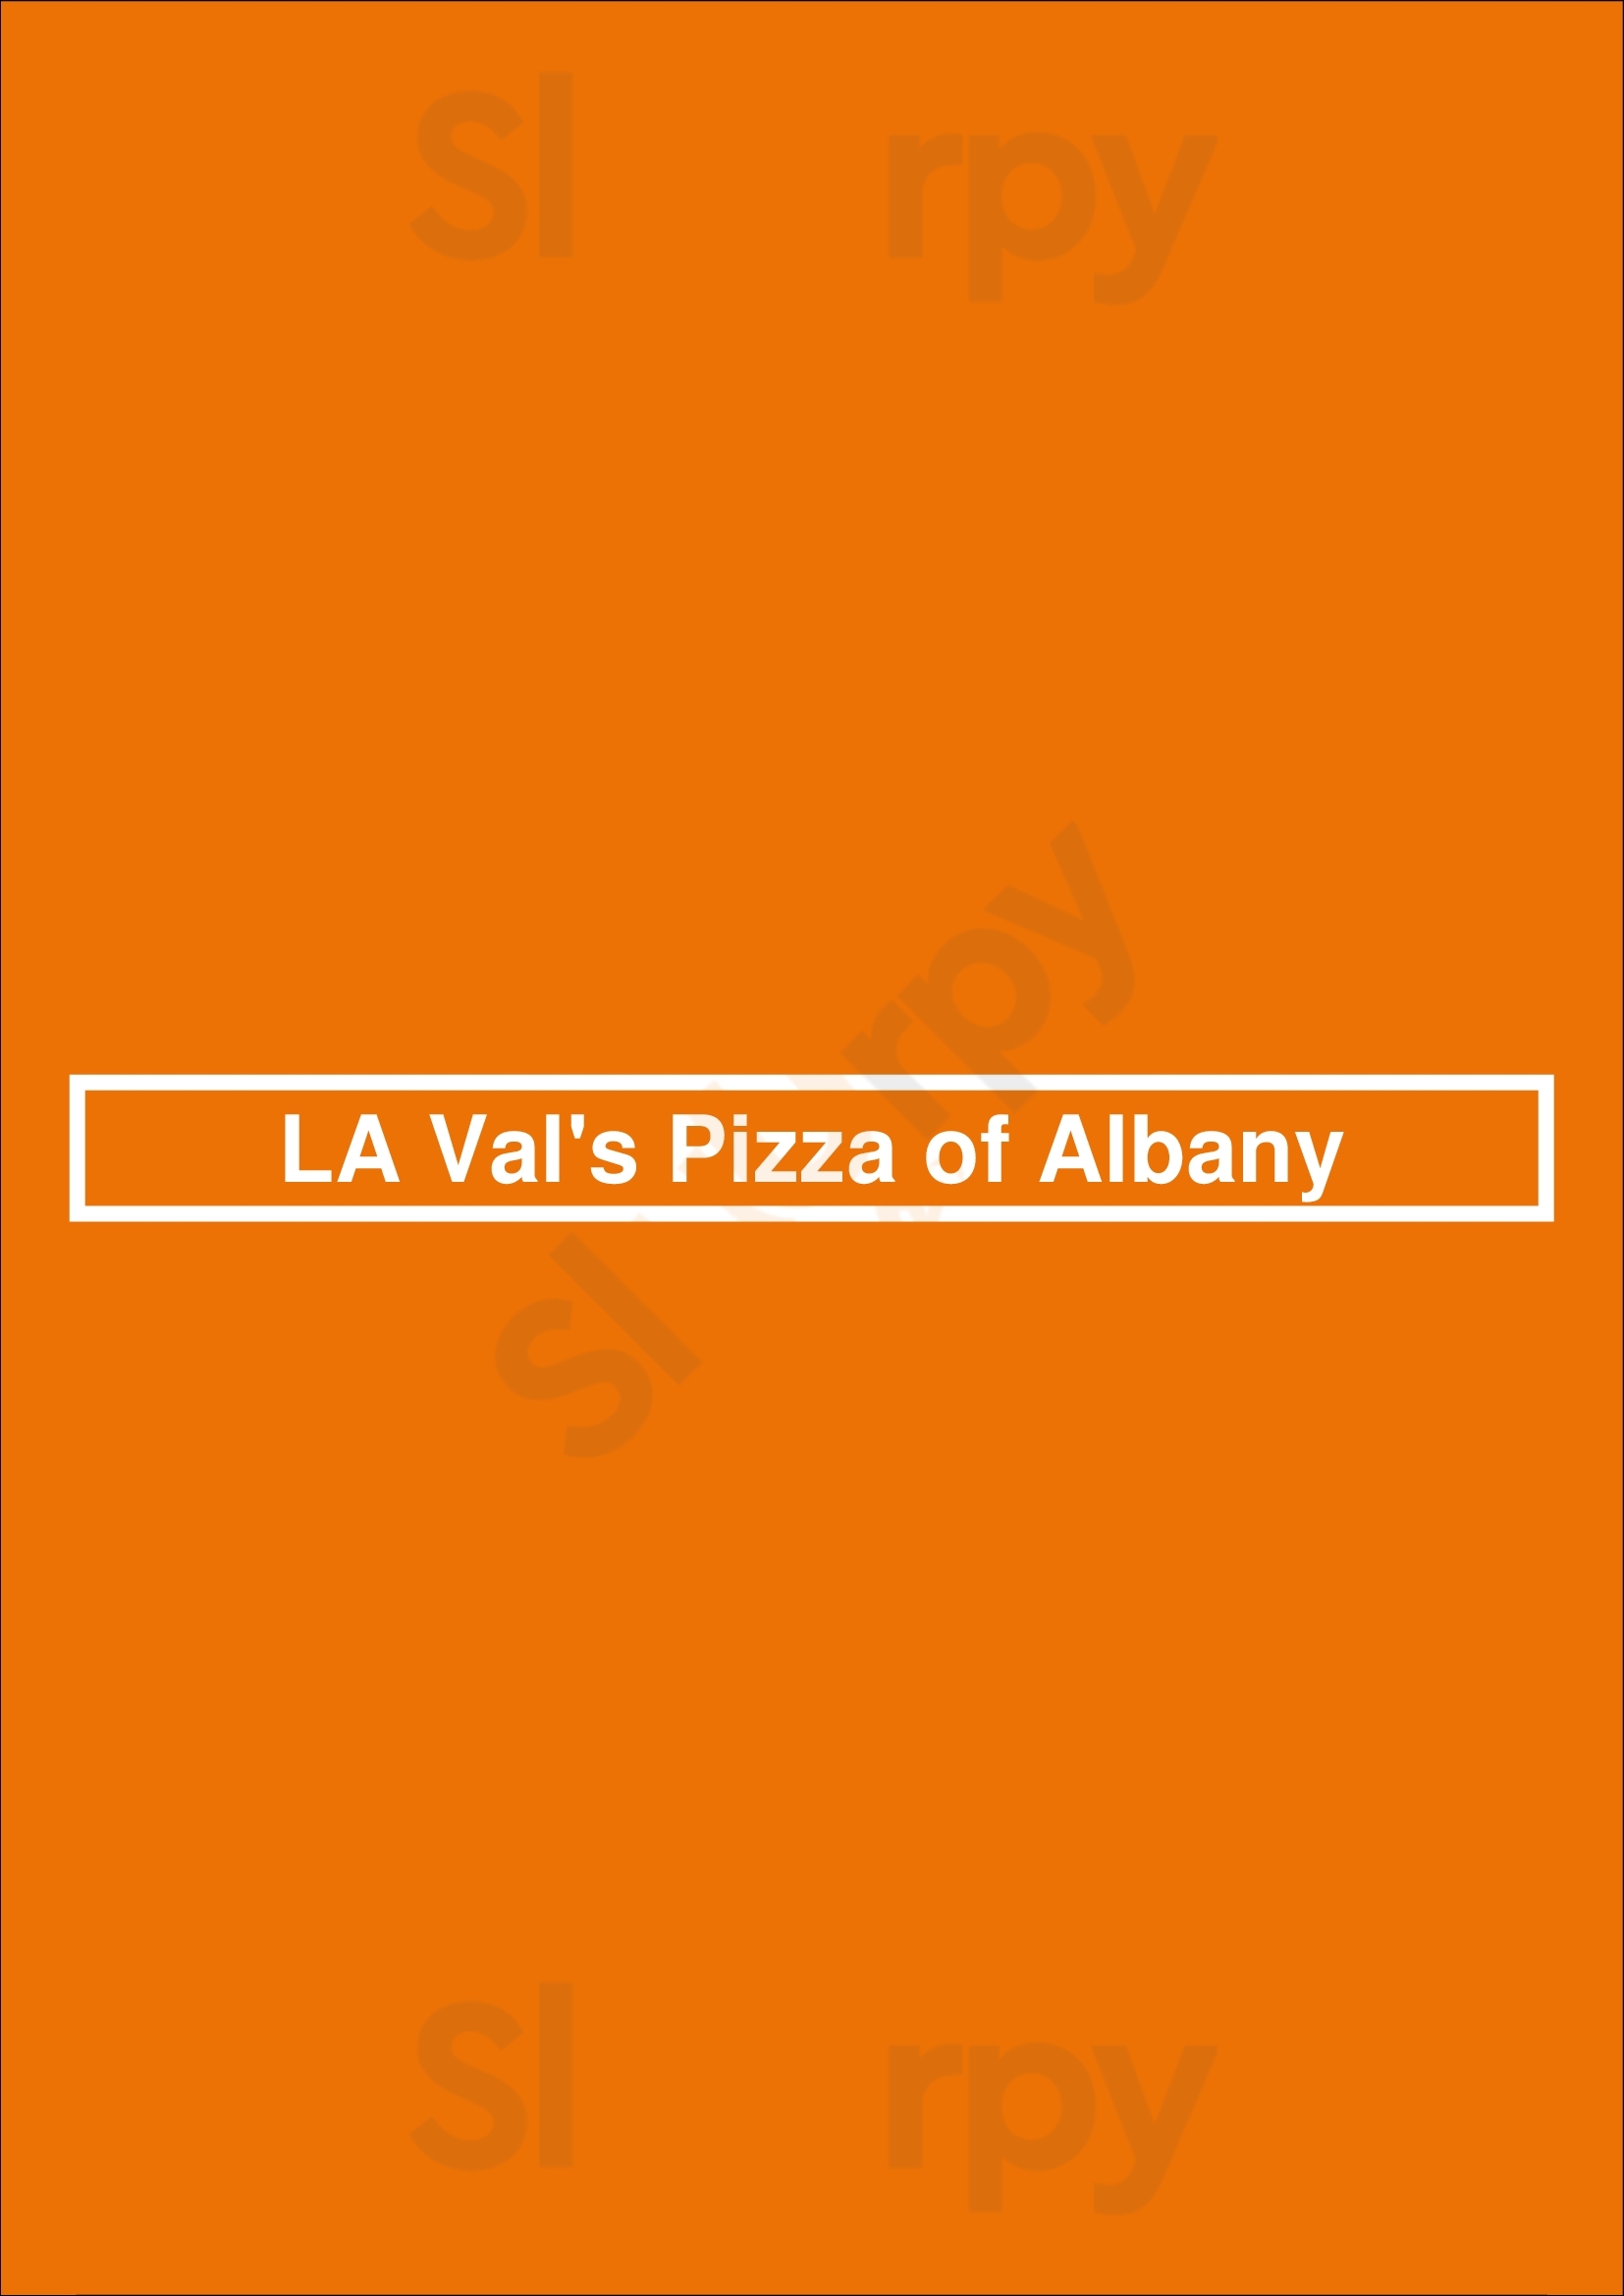 La Val's Pizza Of Albany Albany Menu - 1